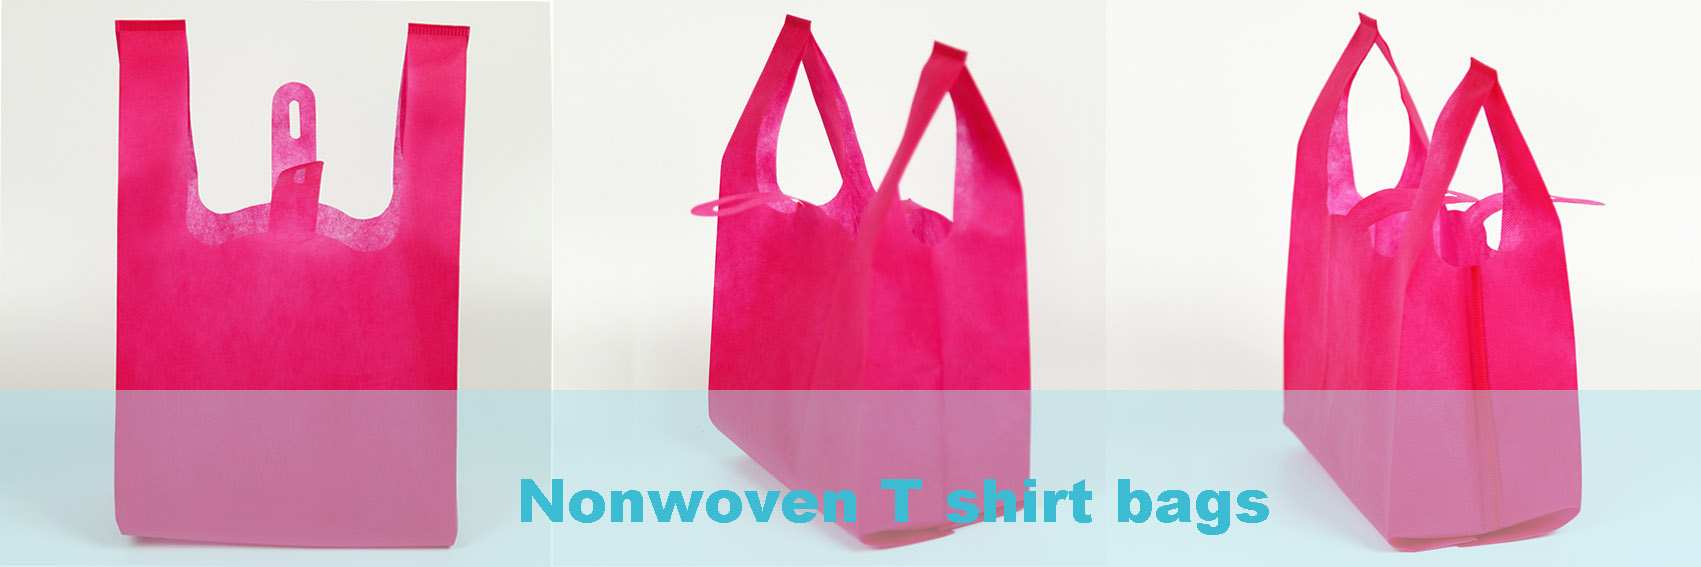 nonwoven t shirt bag 